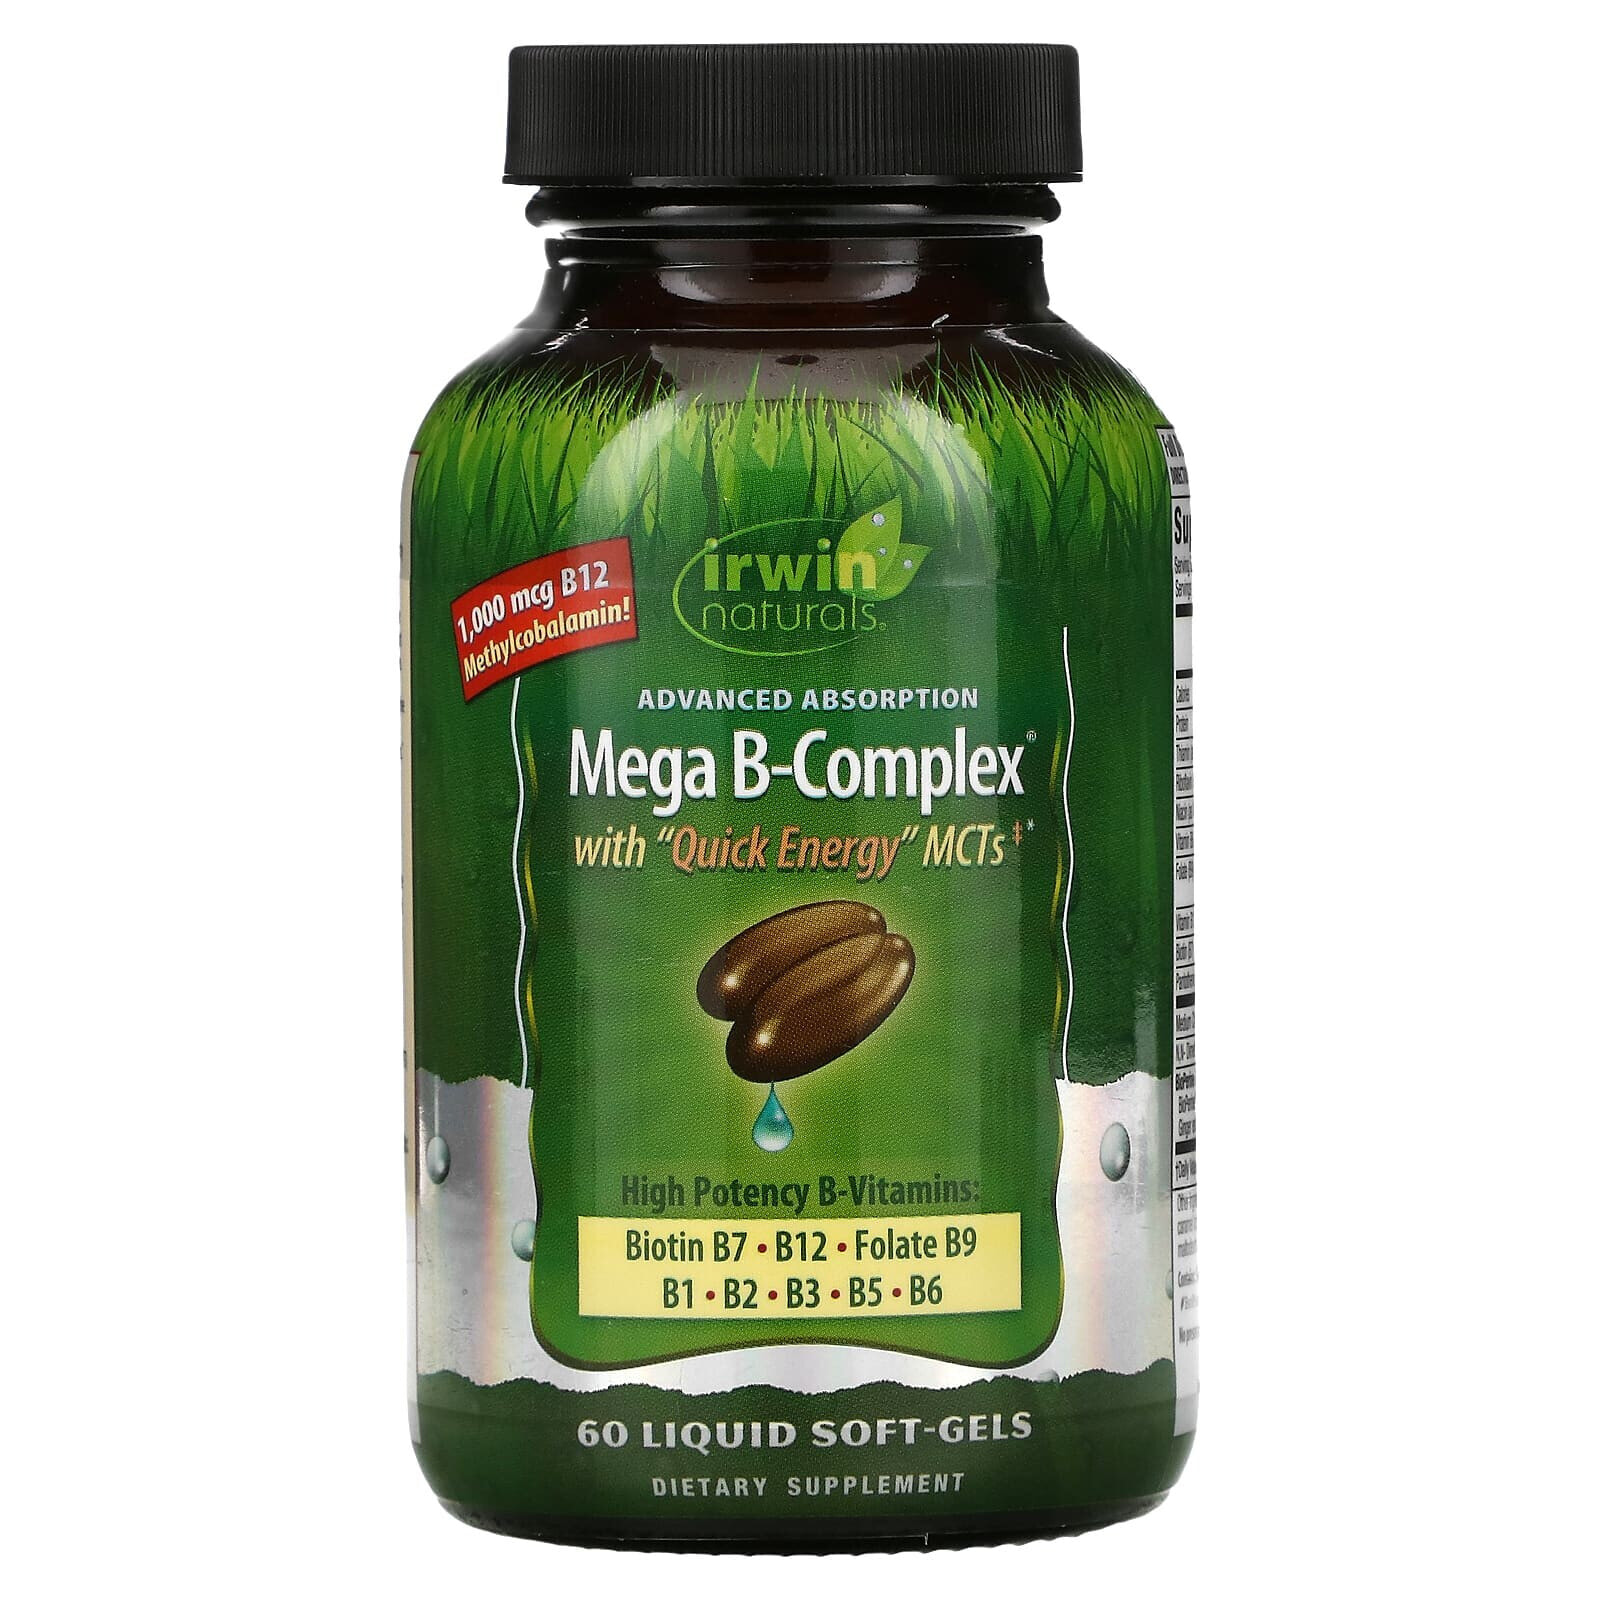 Mega B-Complex with Quick Energy MCT's, 60 Liquid Soft-Gels